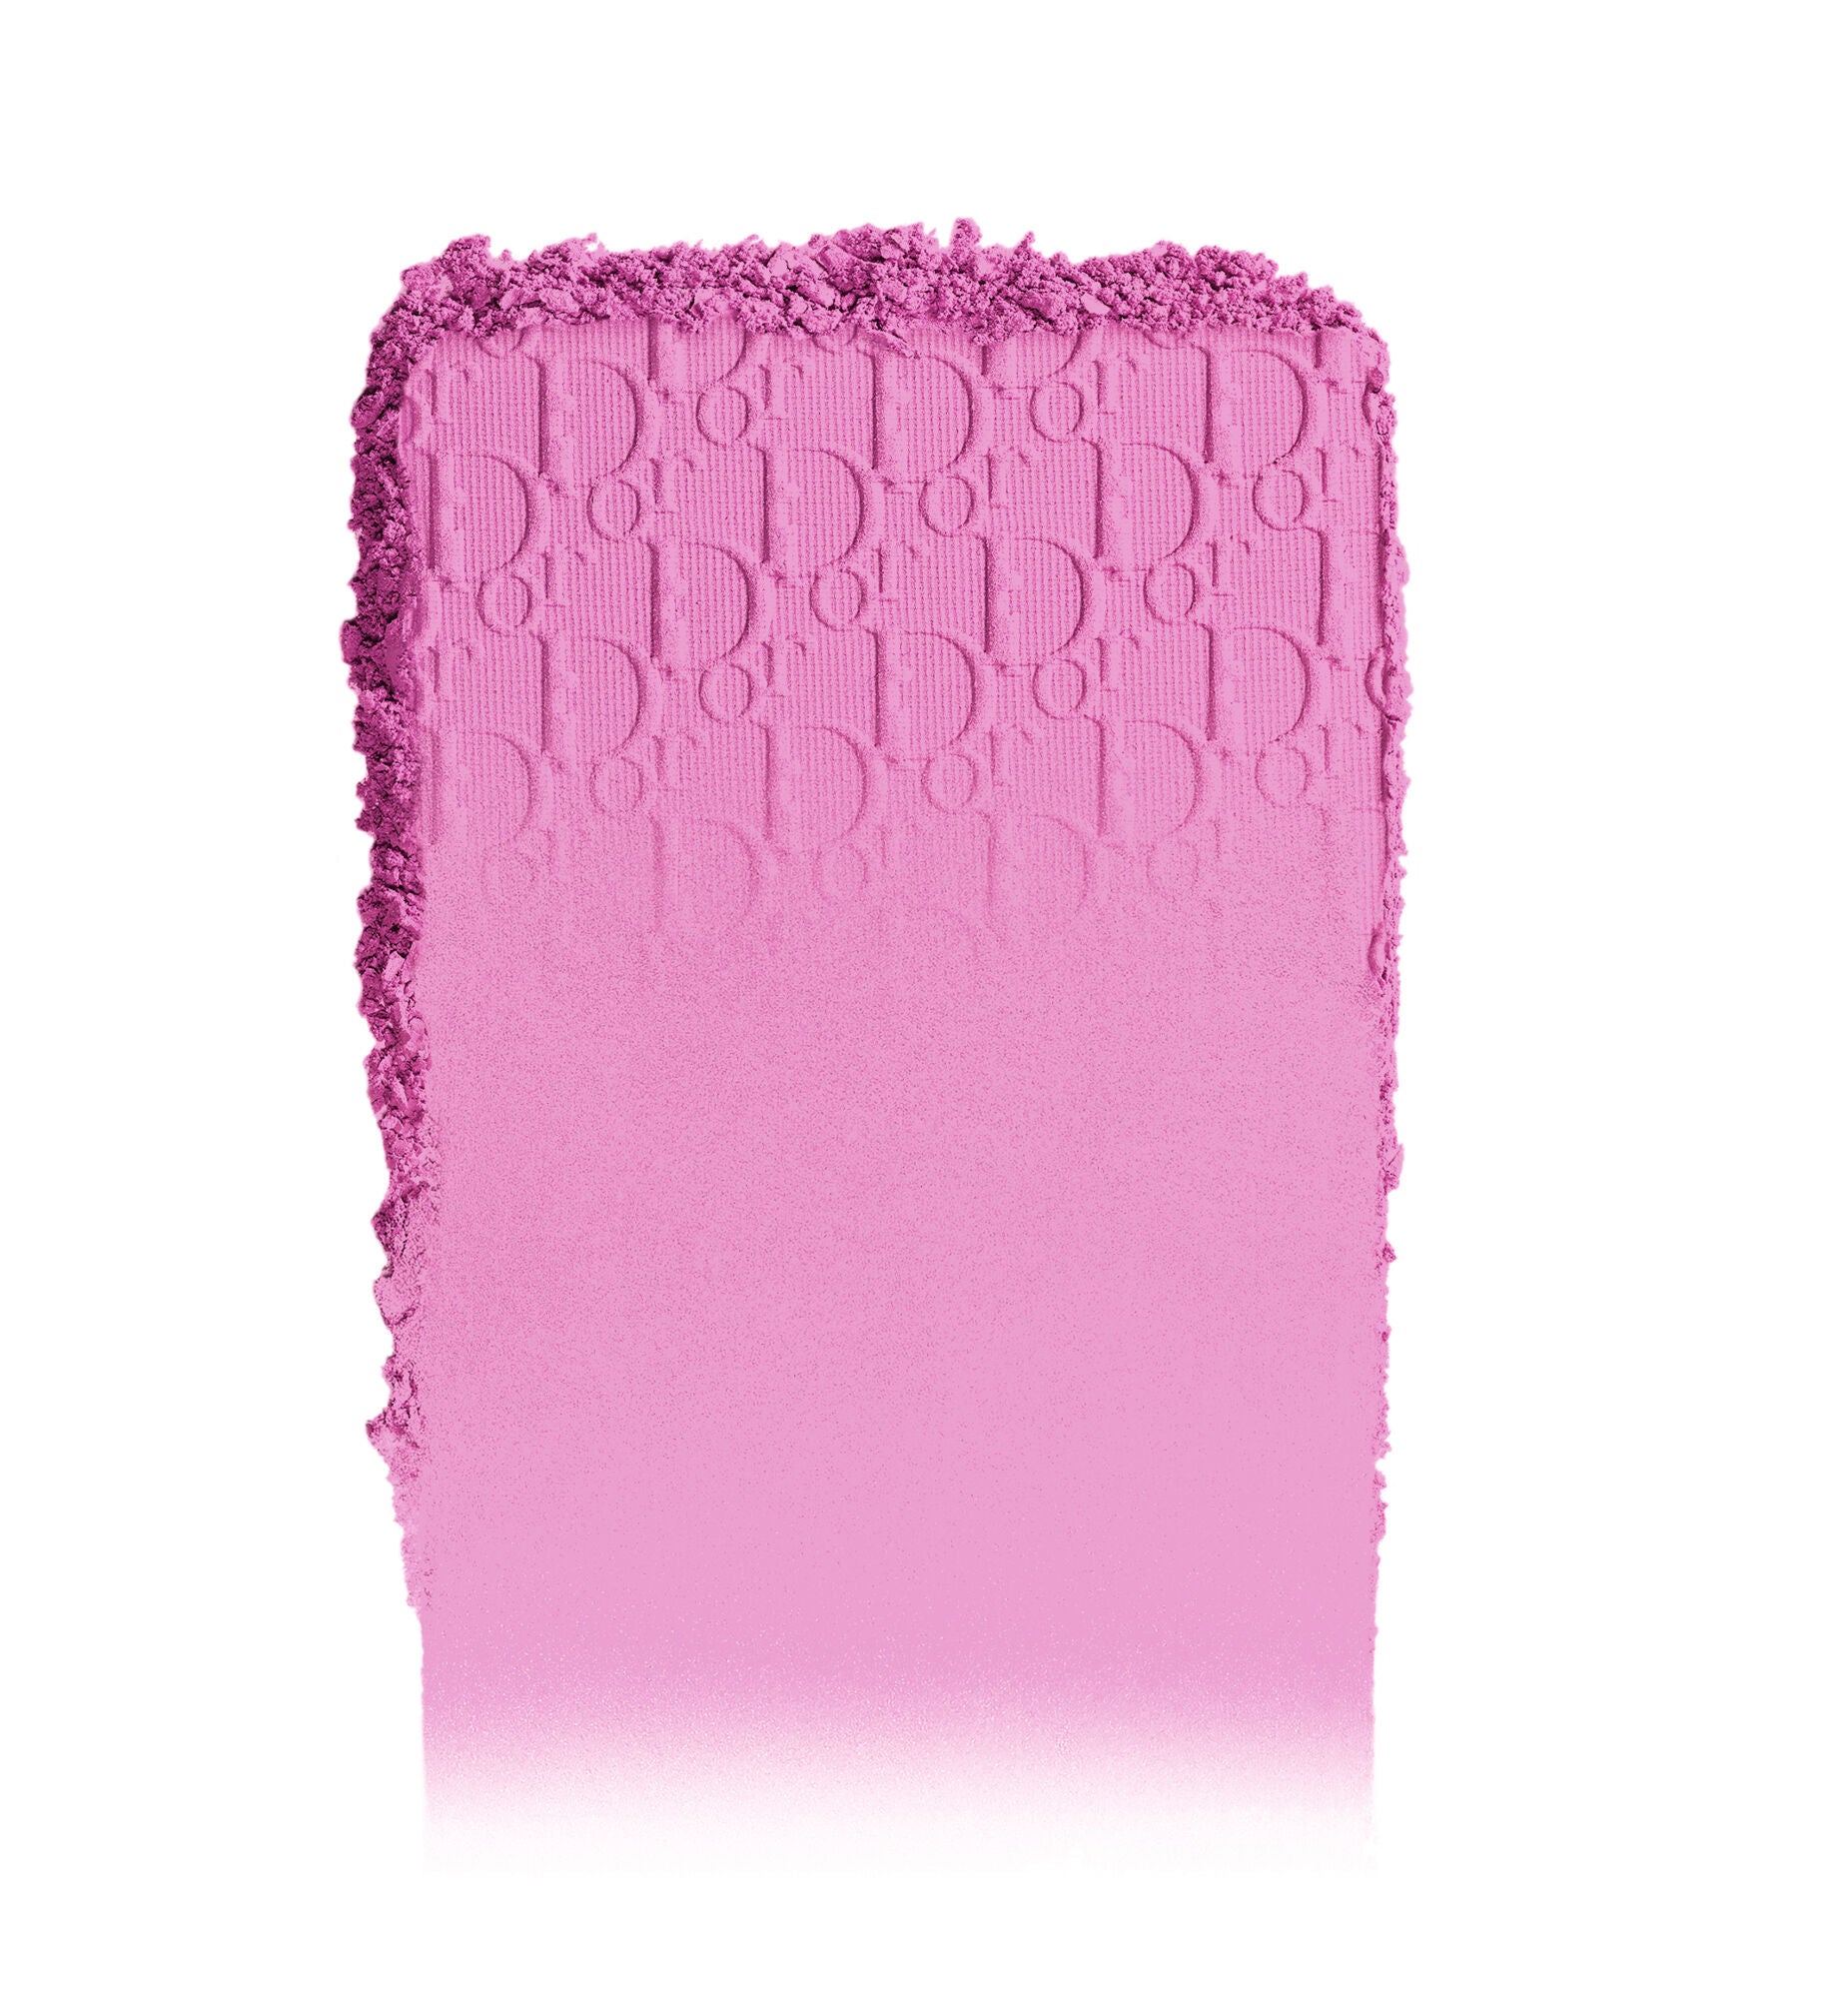 Phấn Má Hồng Dior Rosy Glow #063 Pink Lilac